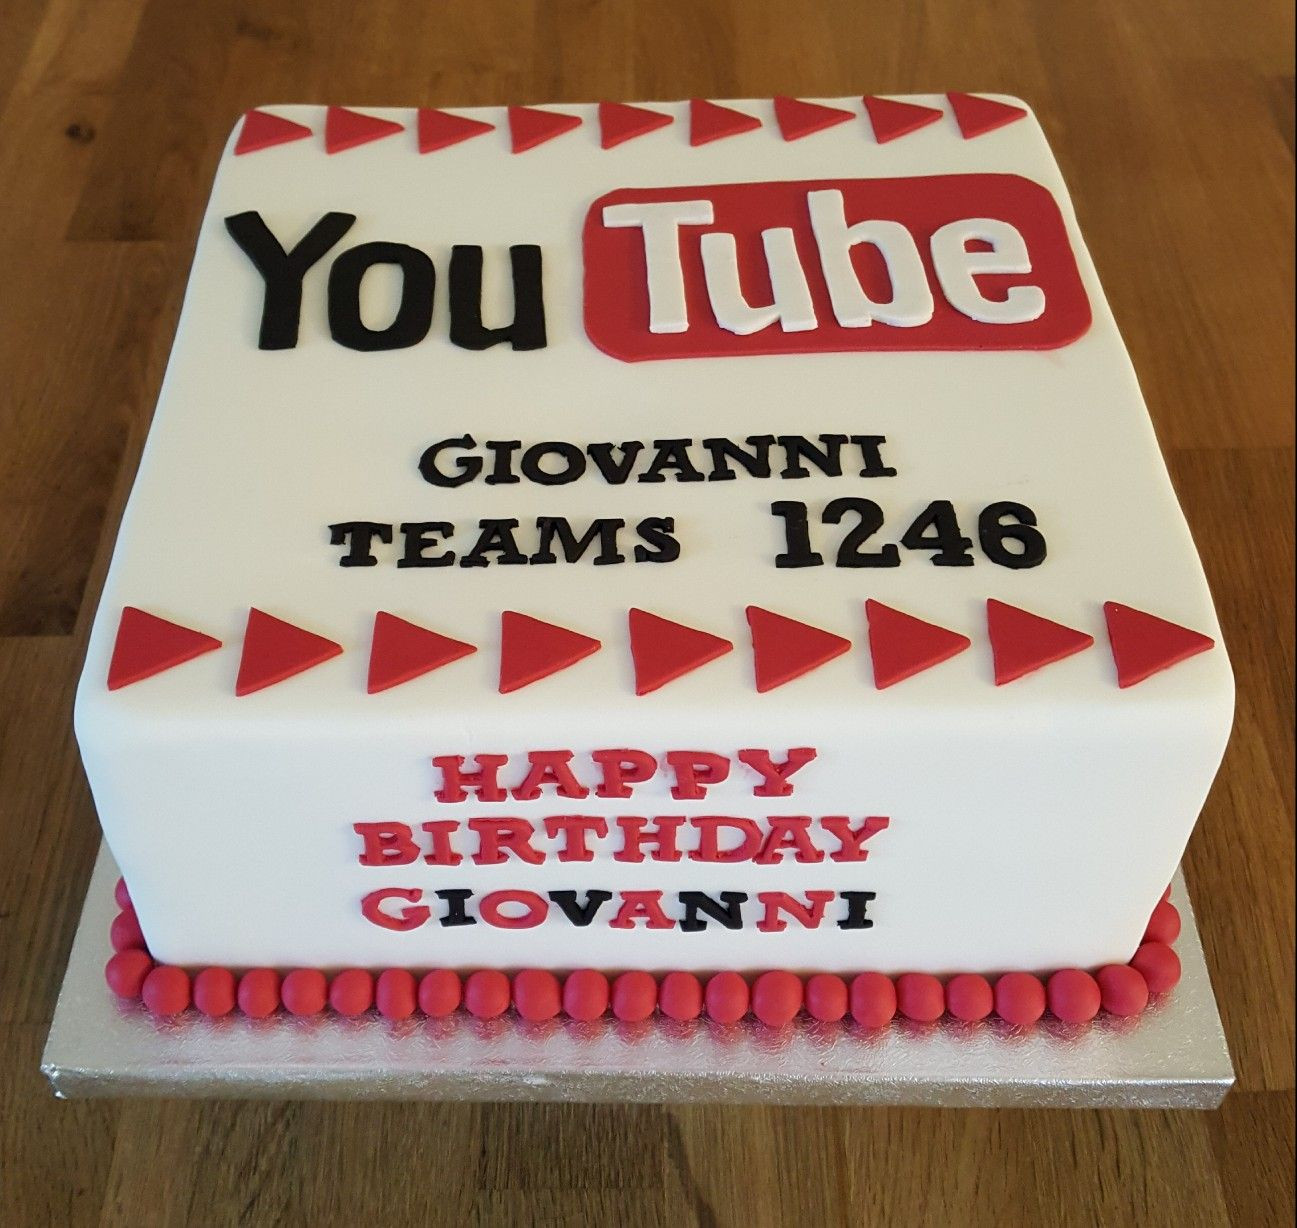 Youtube Birthday Cake
 You Tube themed birthday cake